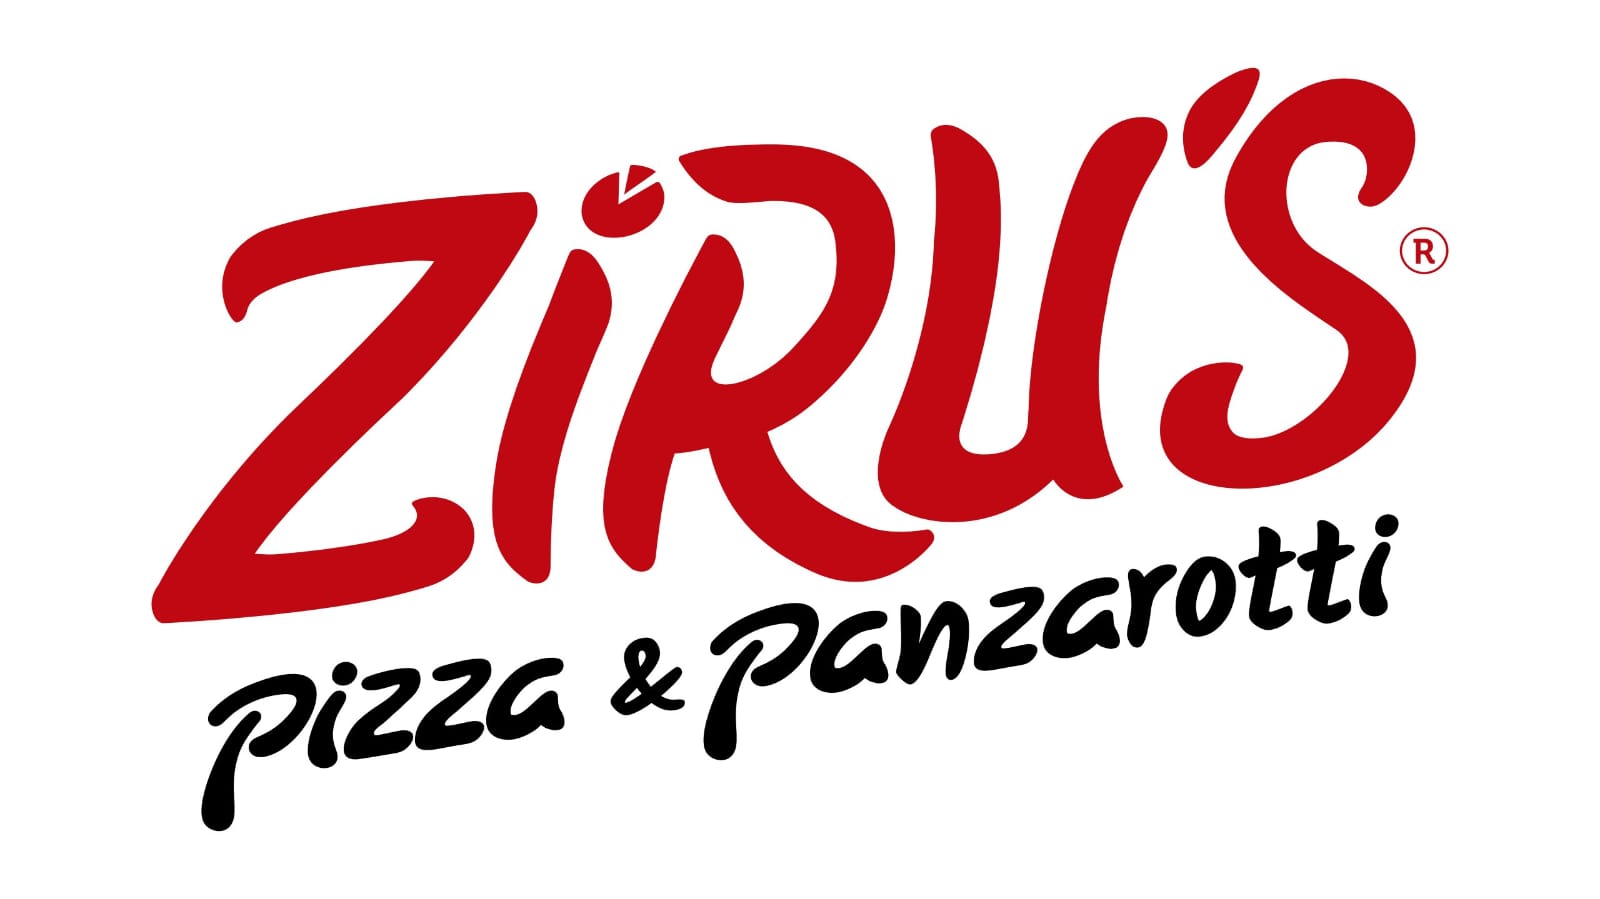 zirus pizza